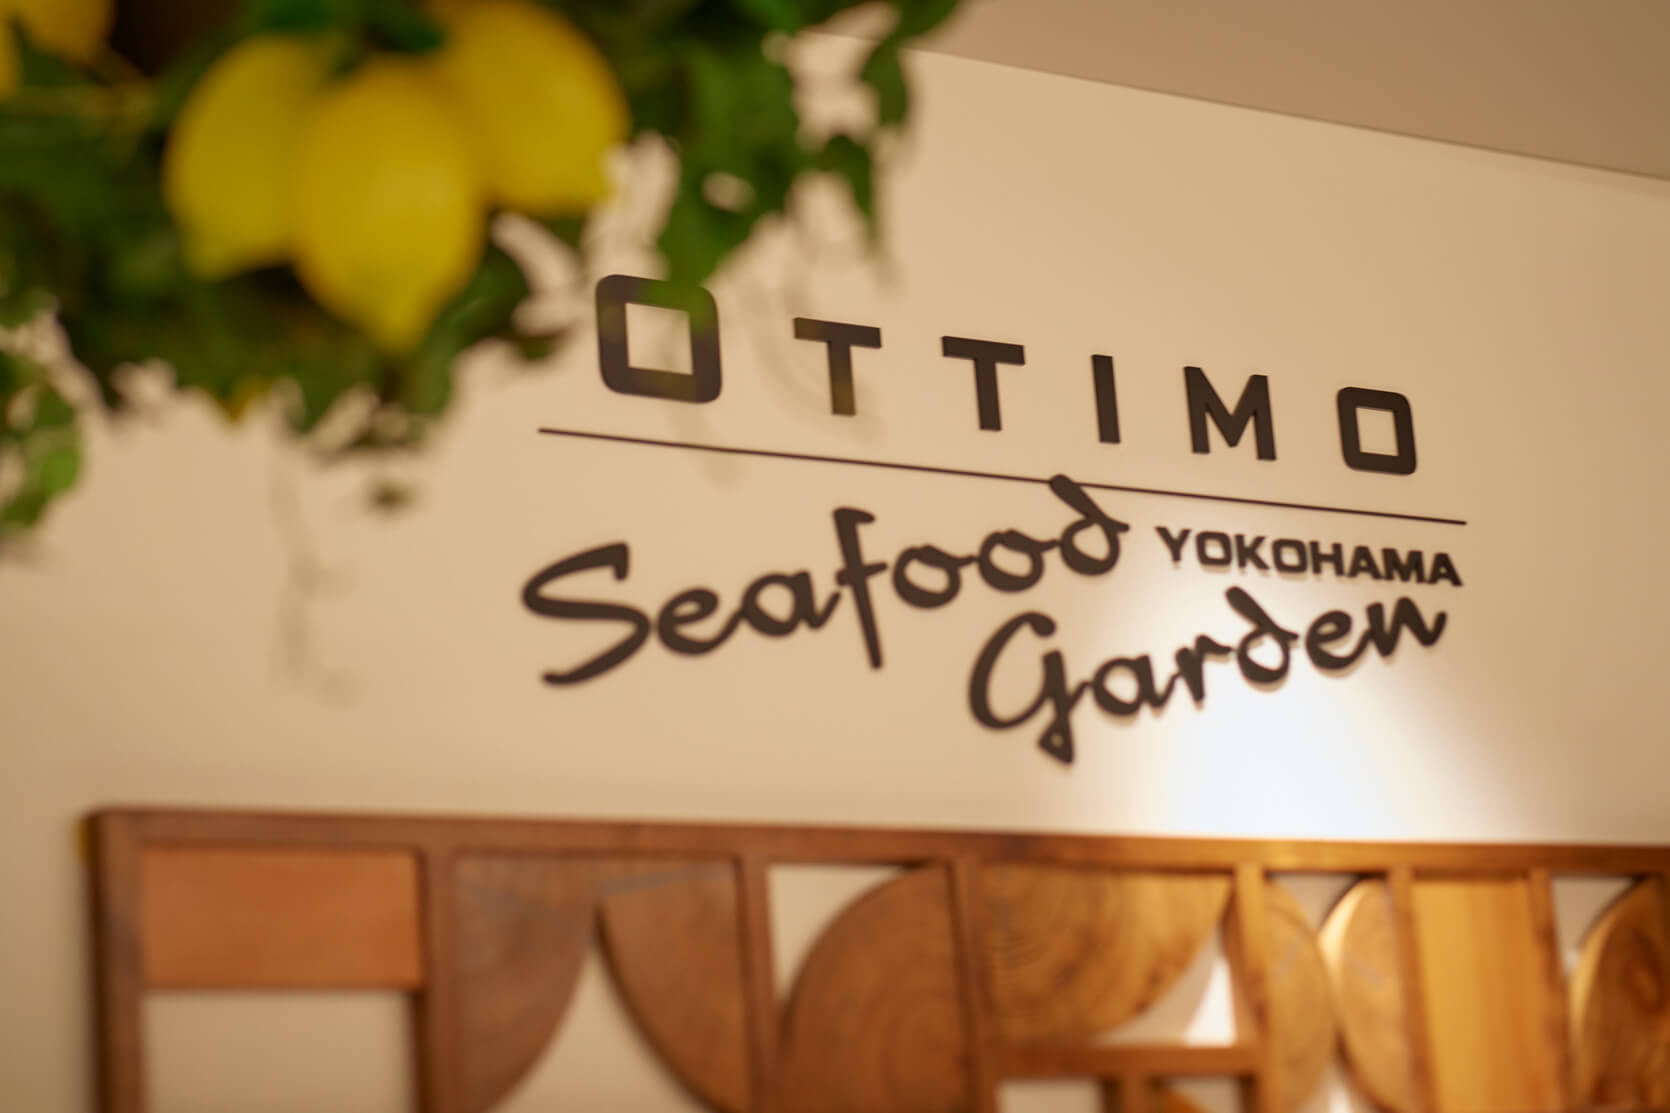 OTTIMO Seafood garden